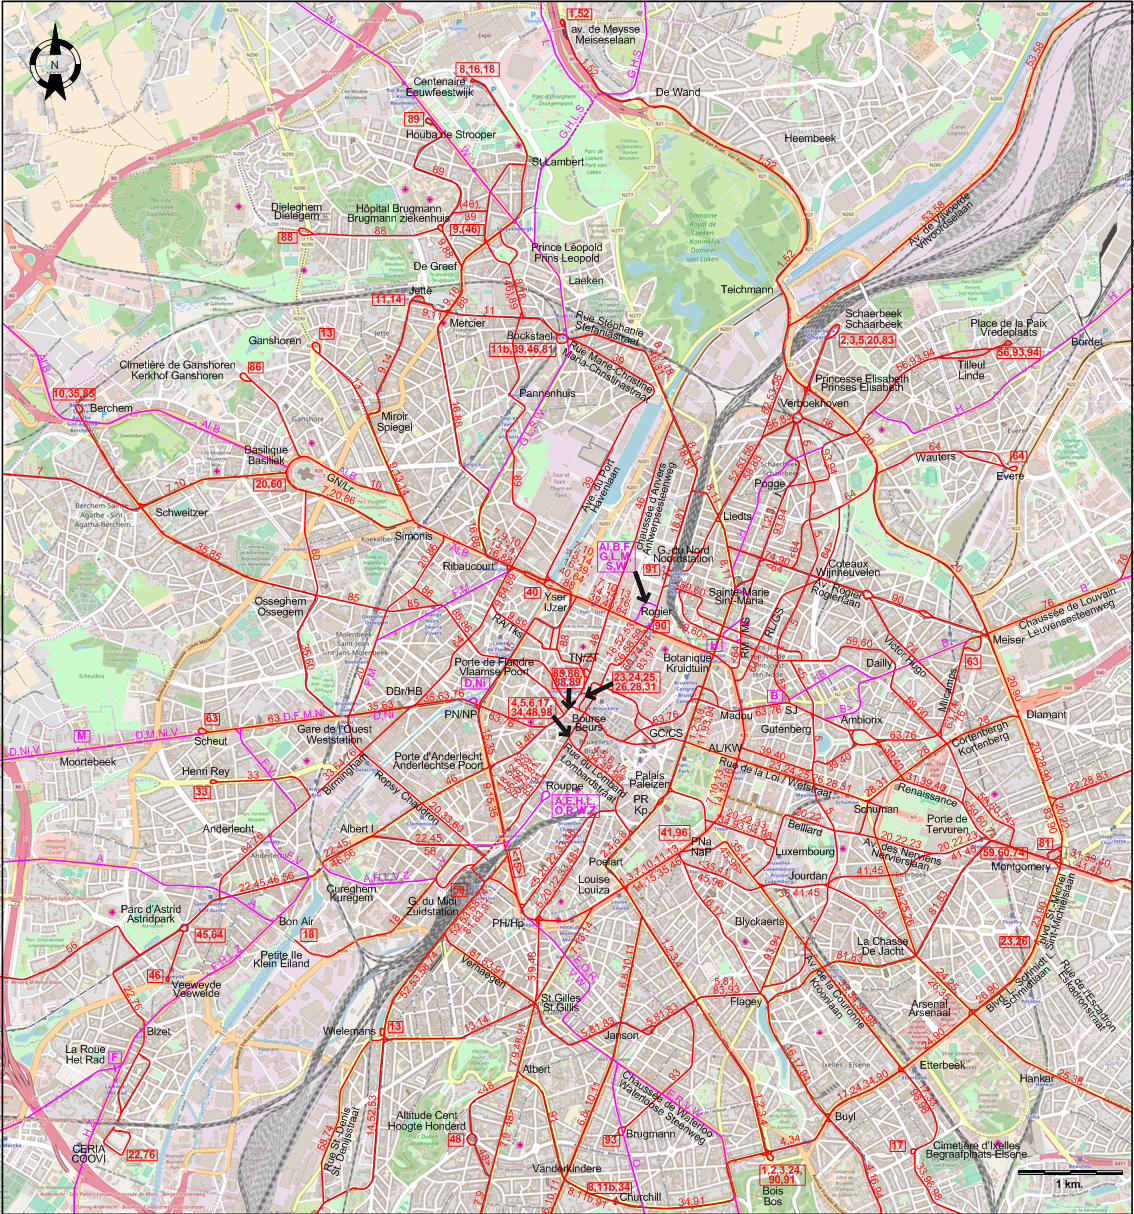 Brussels 1958 centre tram map